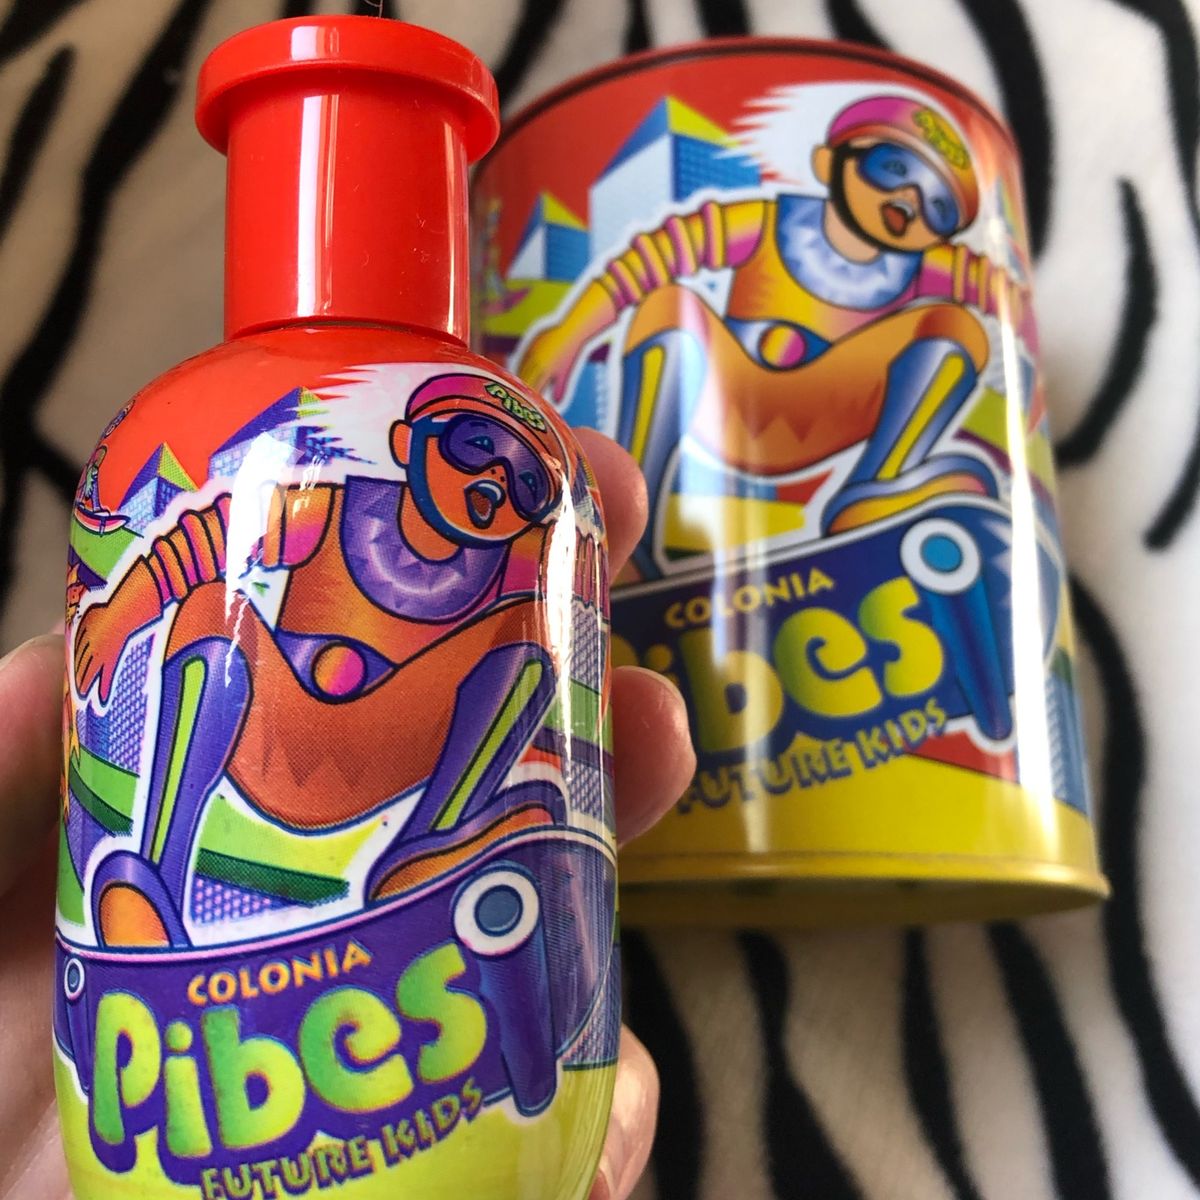 Perfume Pibes Colonia Kids 80ML - Cod Int: 59892 na loja Toku Importados no  Paraguai 